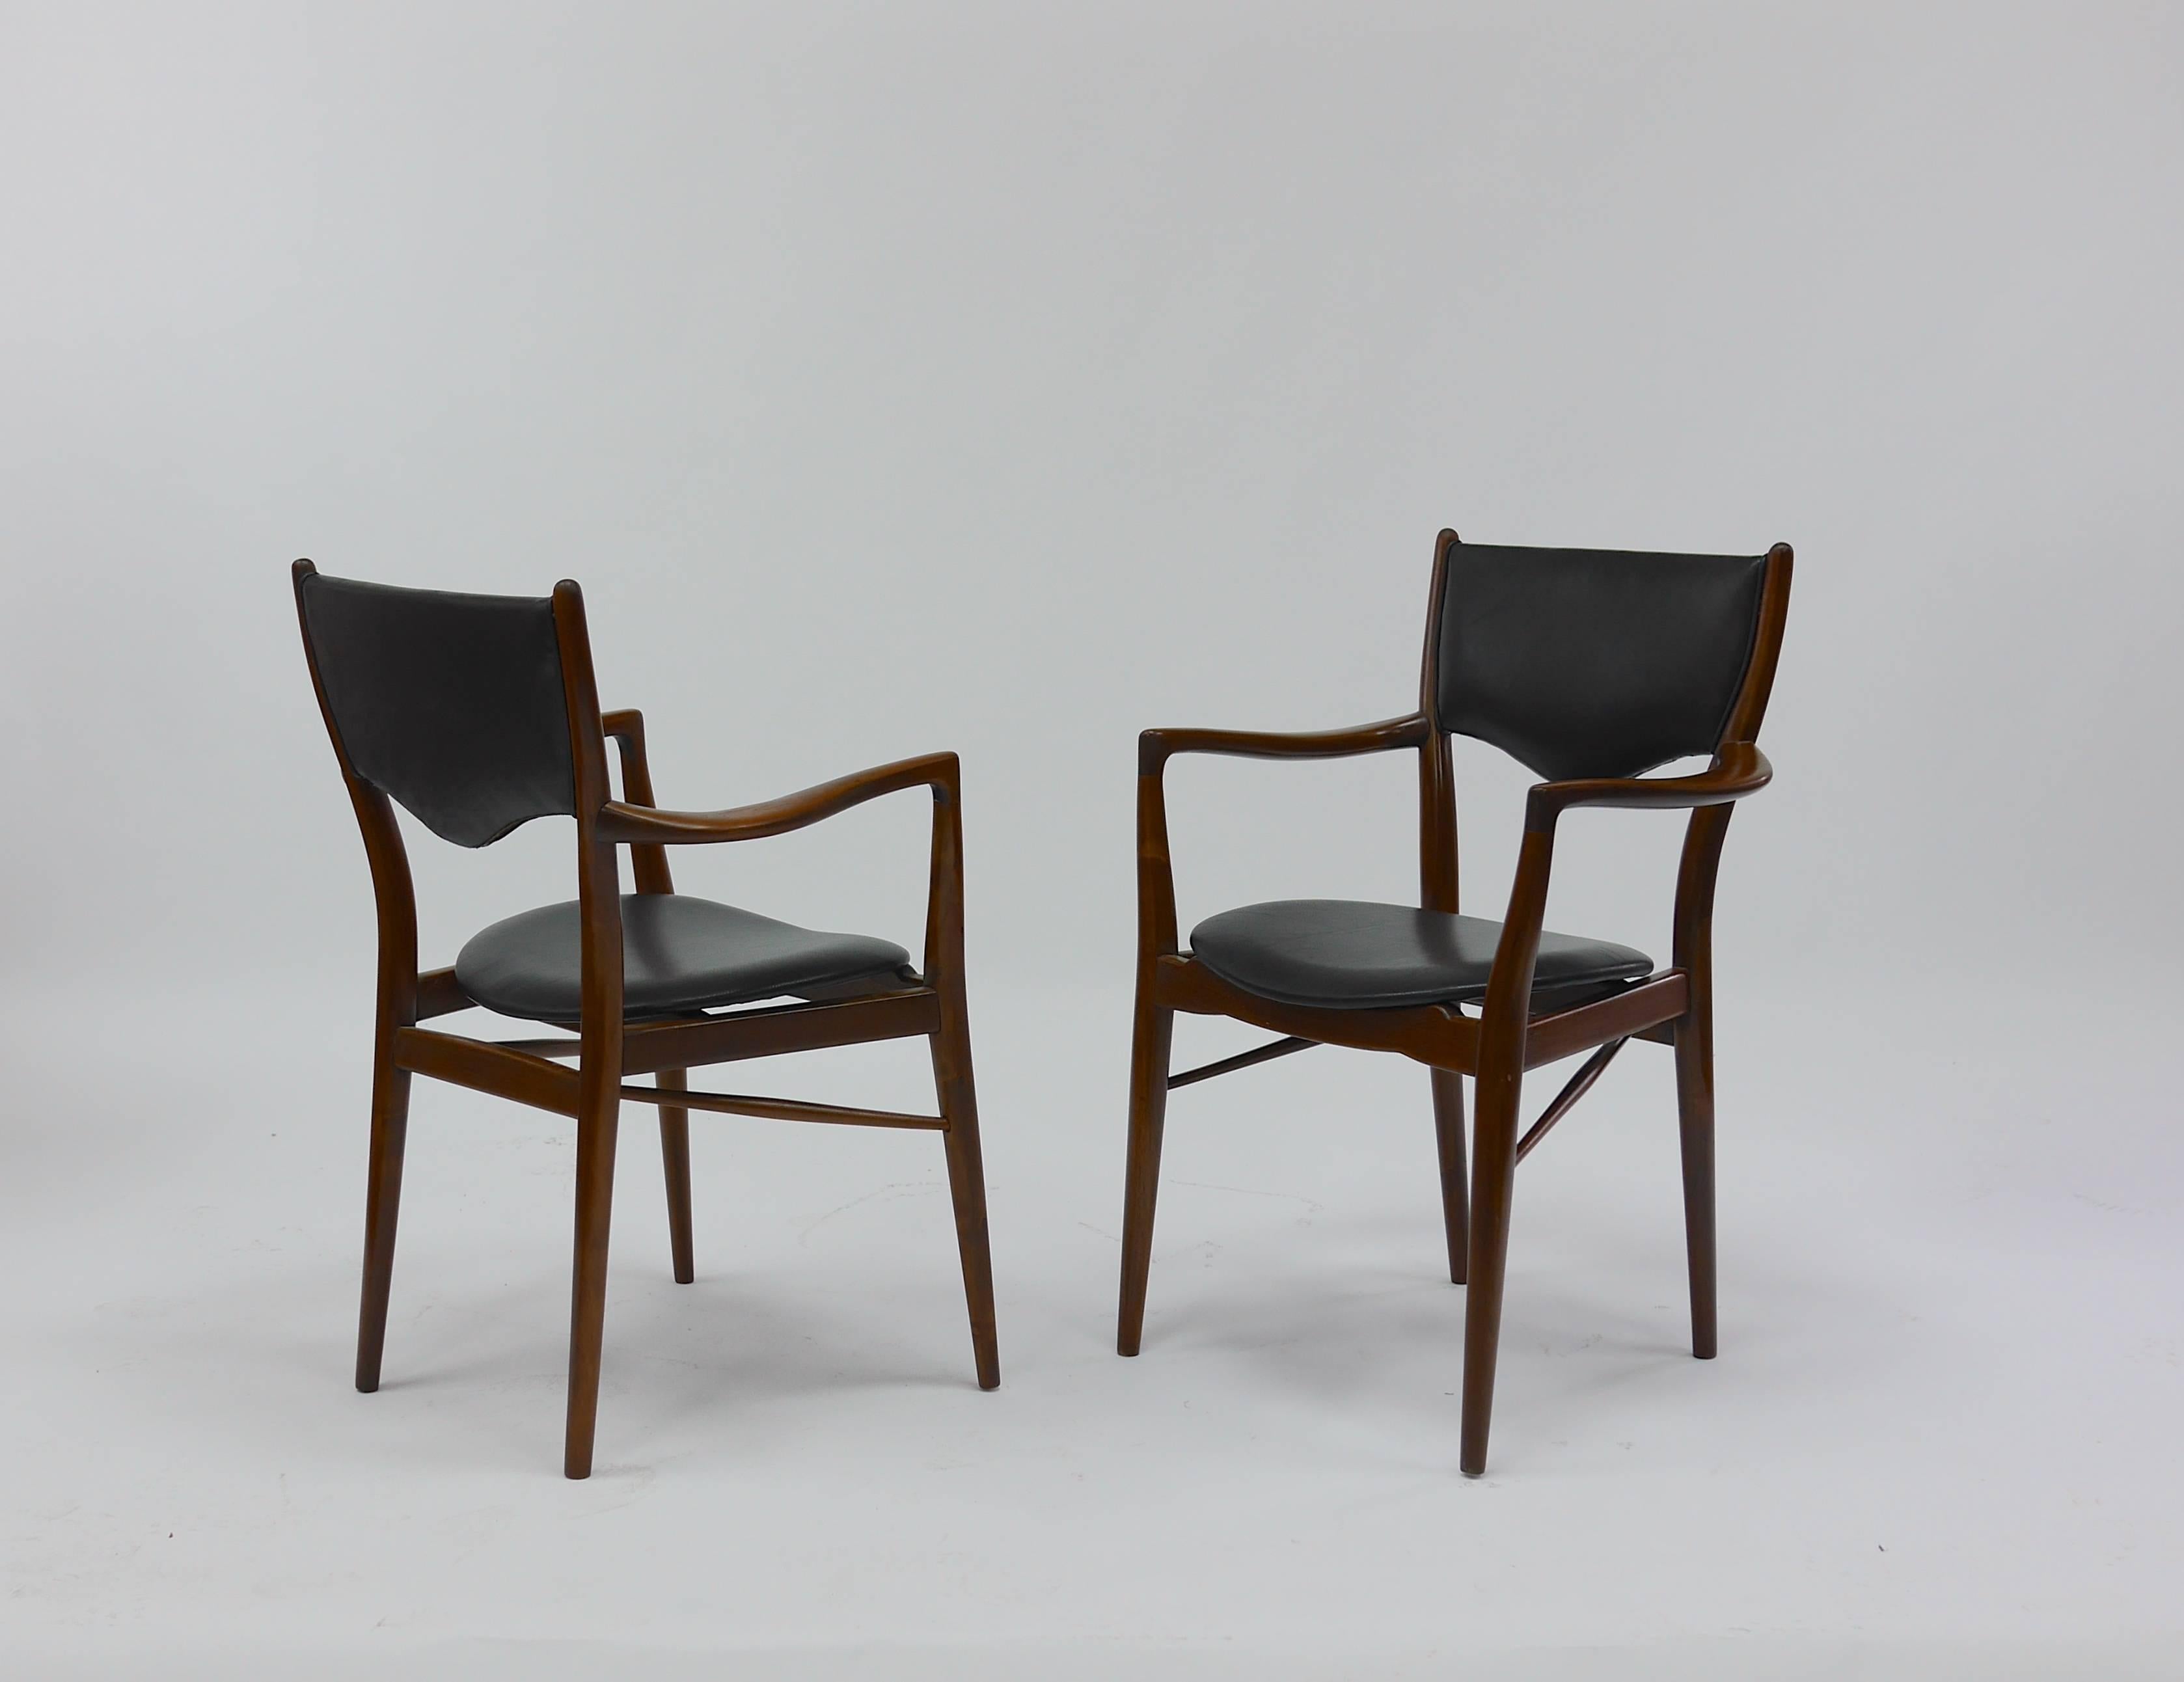 Pair of armchairs by Finn Juhl, Bovirke Denmark, 1946, Beech and vintage leather.